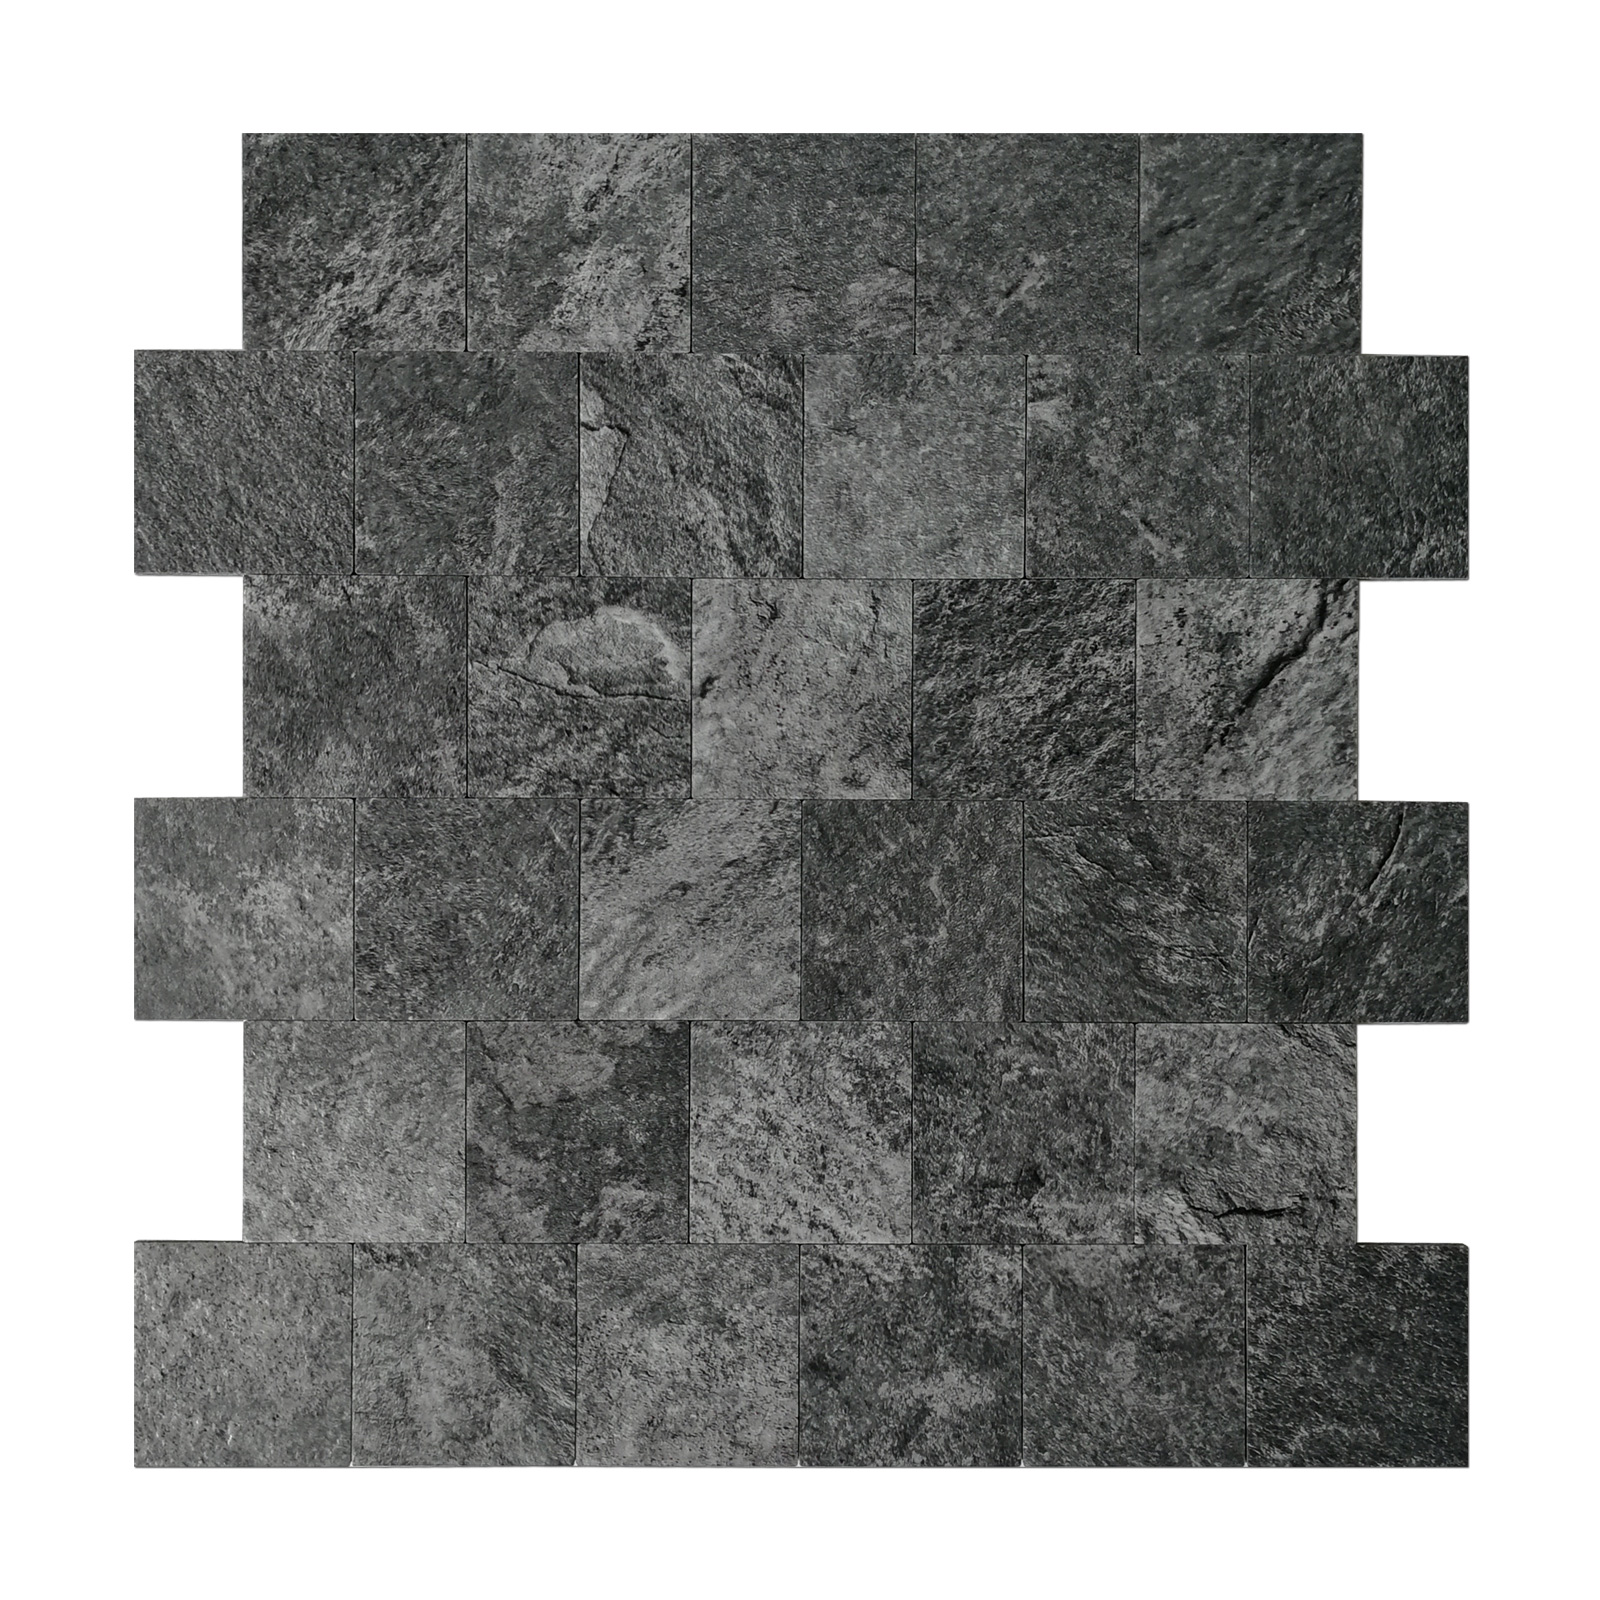 Art3d Peel and Stick Backsplash Tile for Kitchen, Faux Stone Backsplash Tiles, Black (5 Tiles)